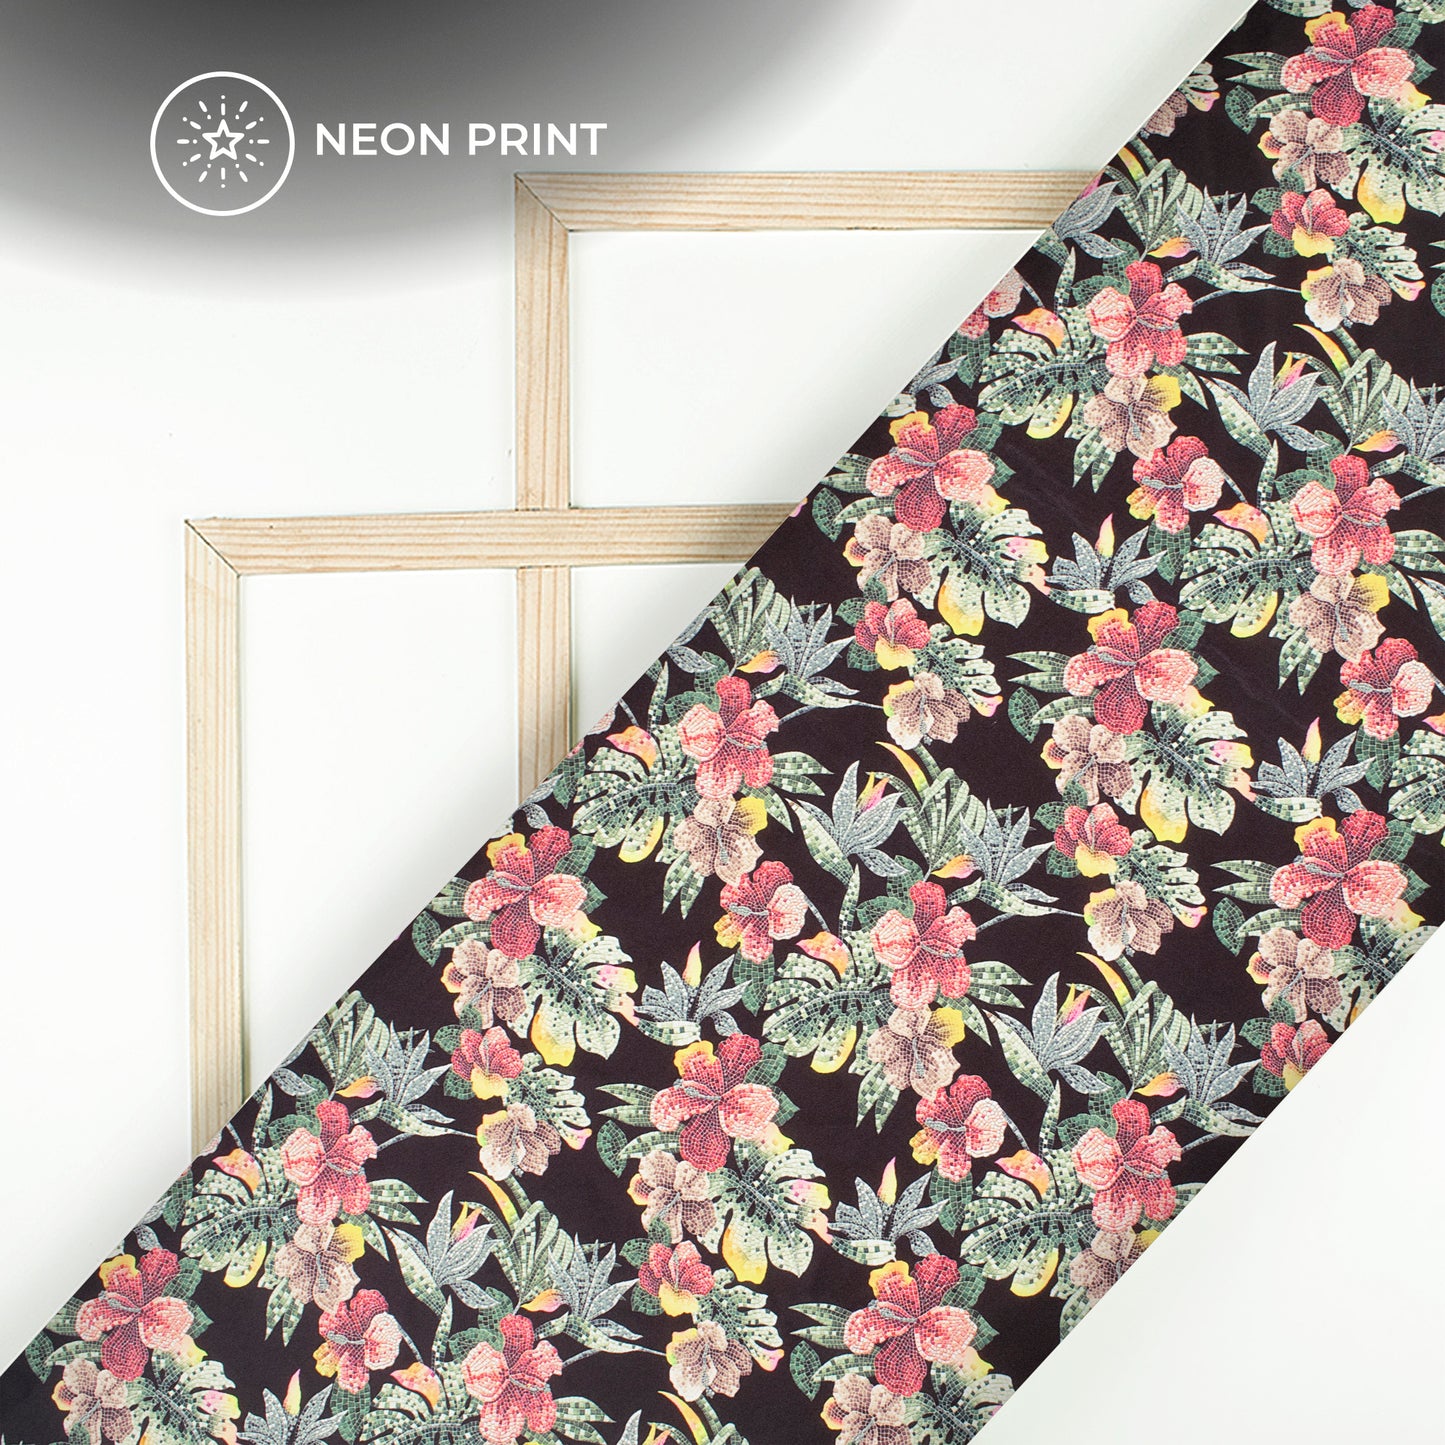 Neon Splendor: Floral Digital Print Rayon Fabric